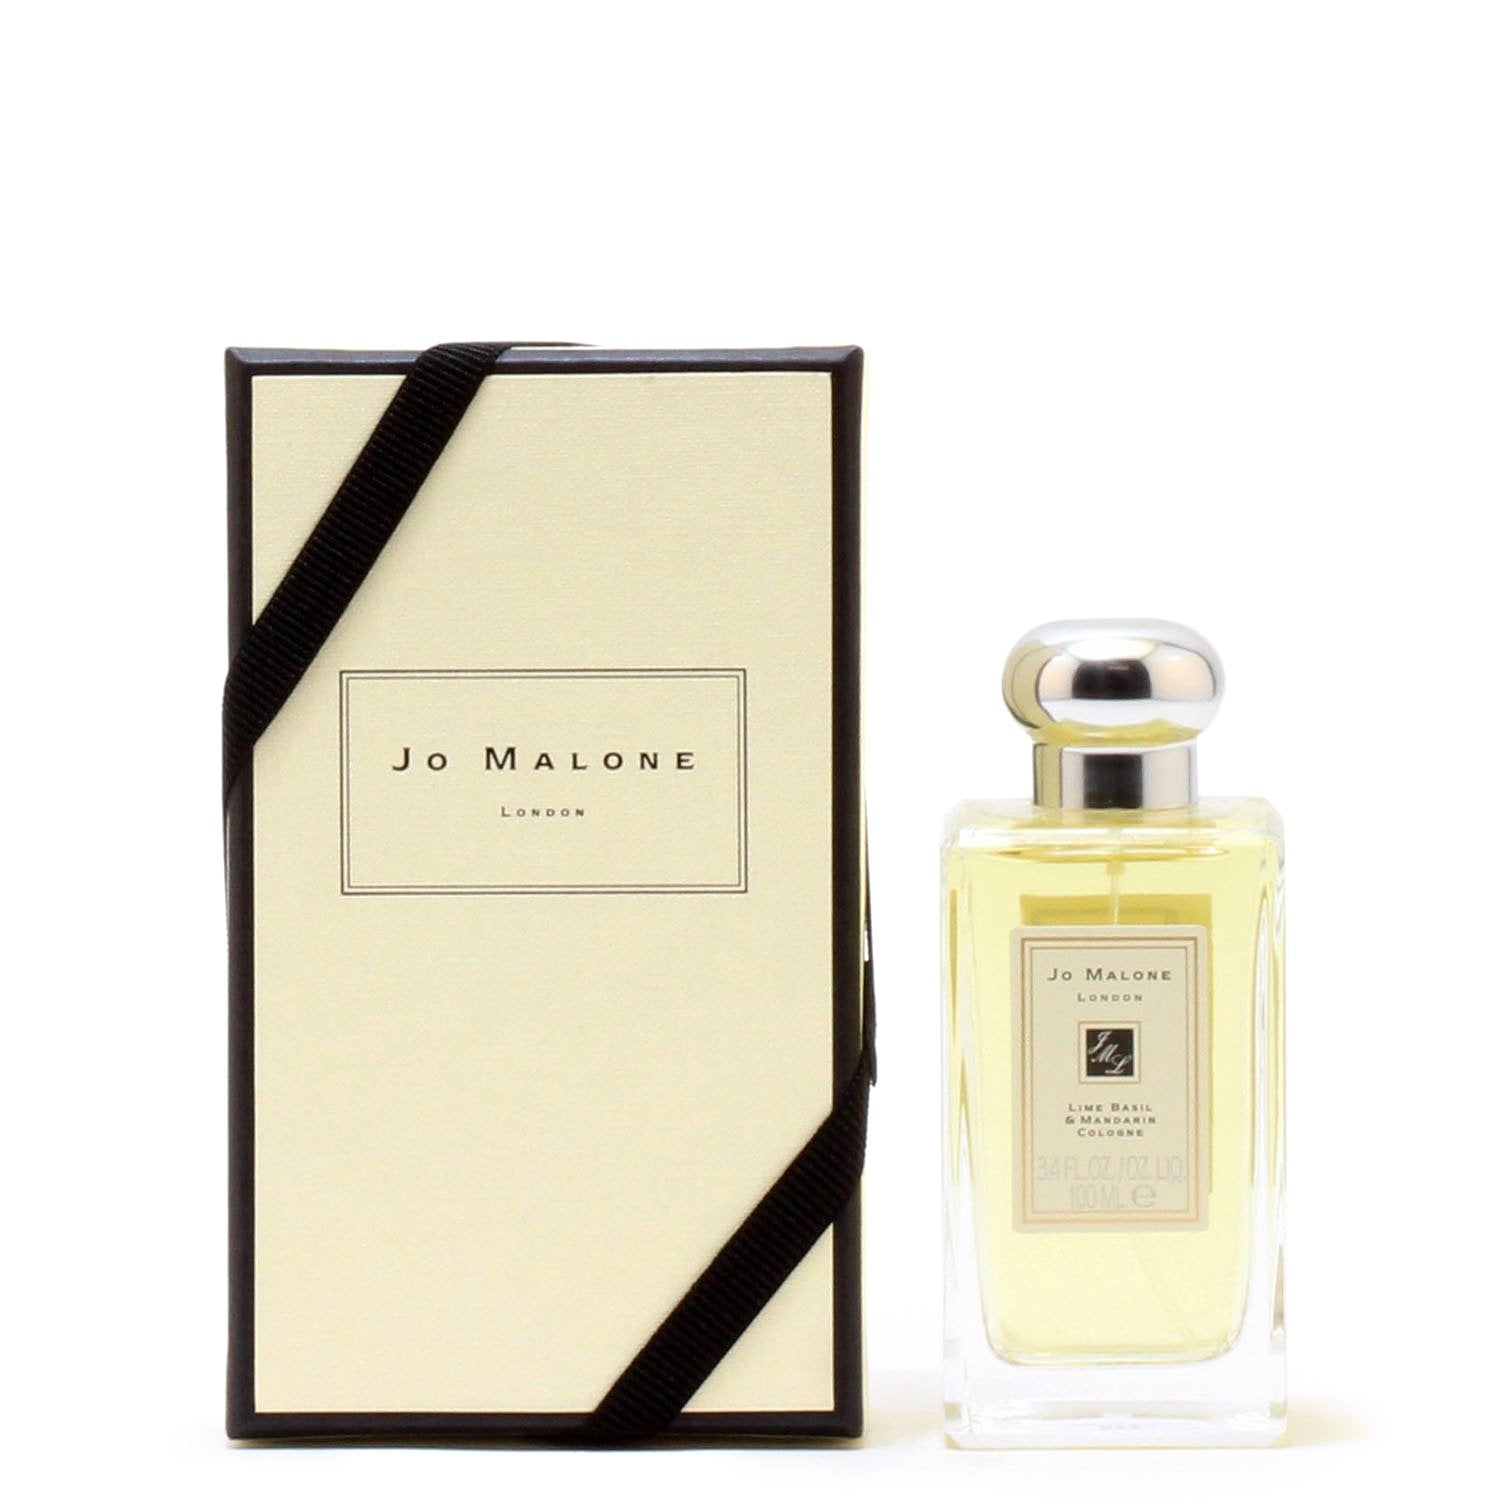 Perfume - JO MALONE LIME BASIL & MANDARIN FOR WOMEN - COLOGNE